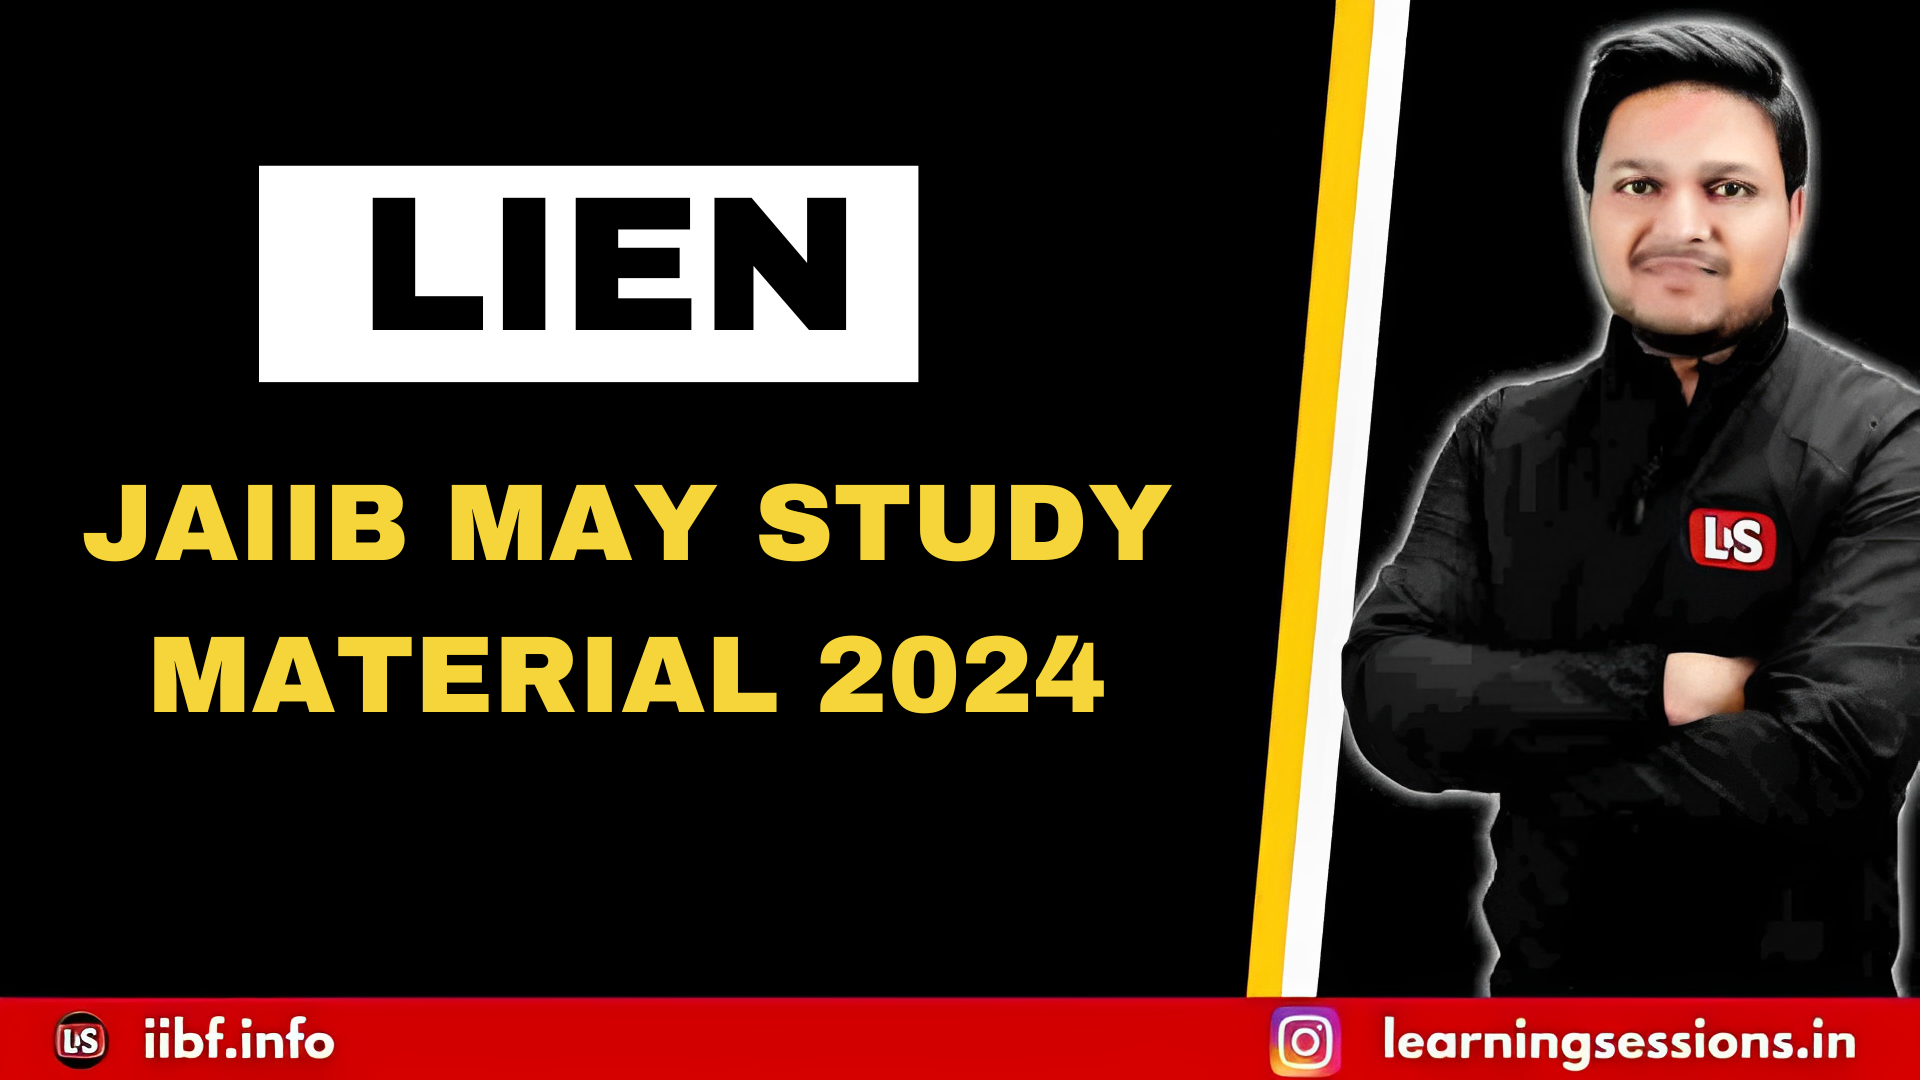 JAIIB MAY STUDY MATERIAL 2024